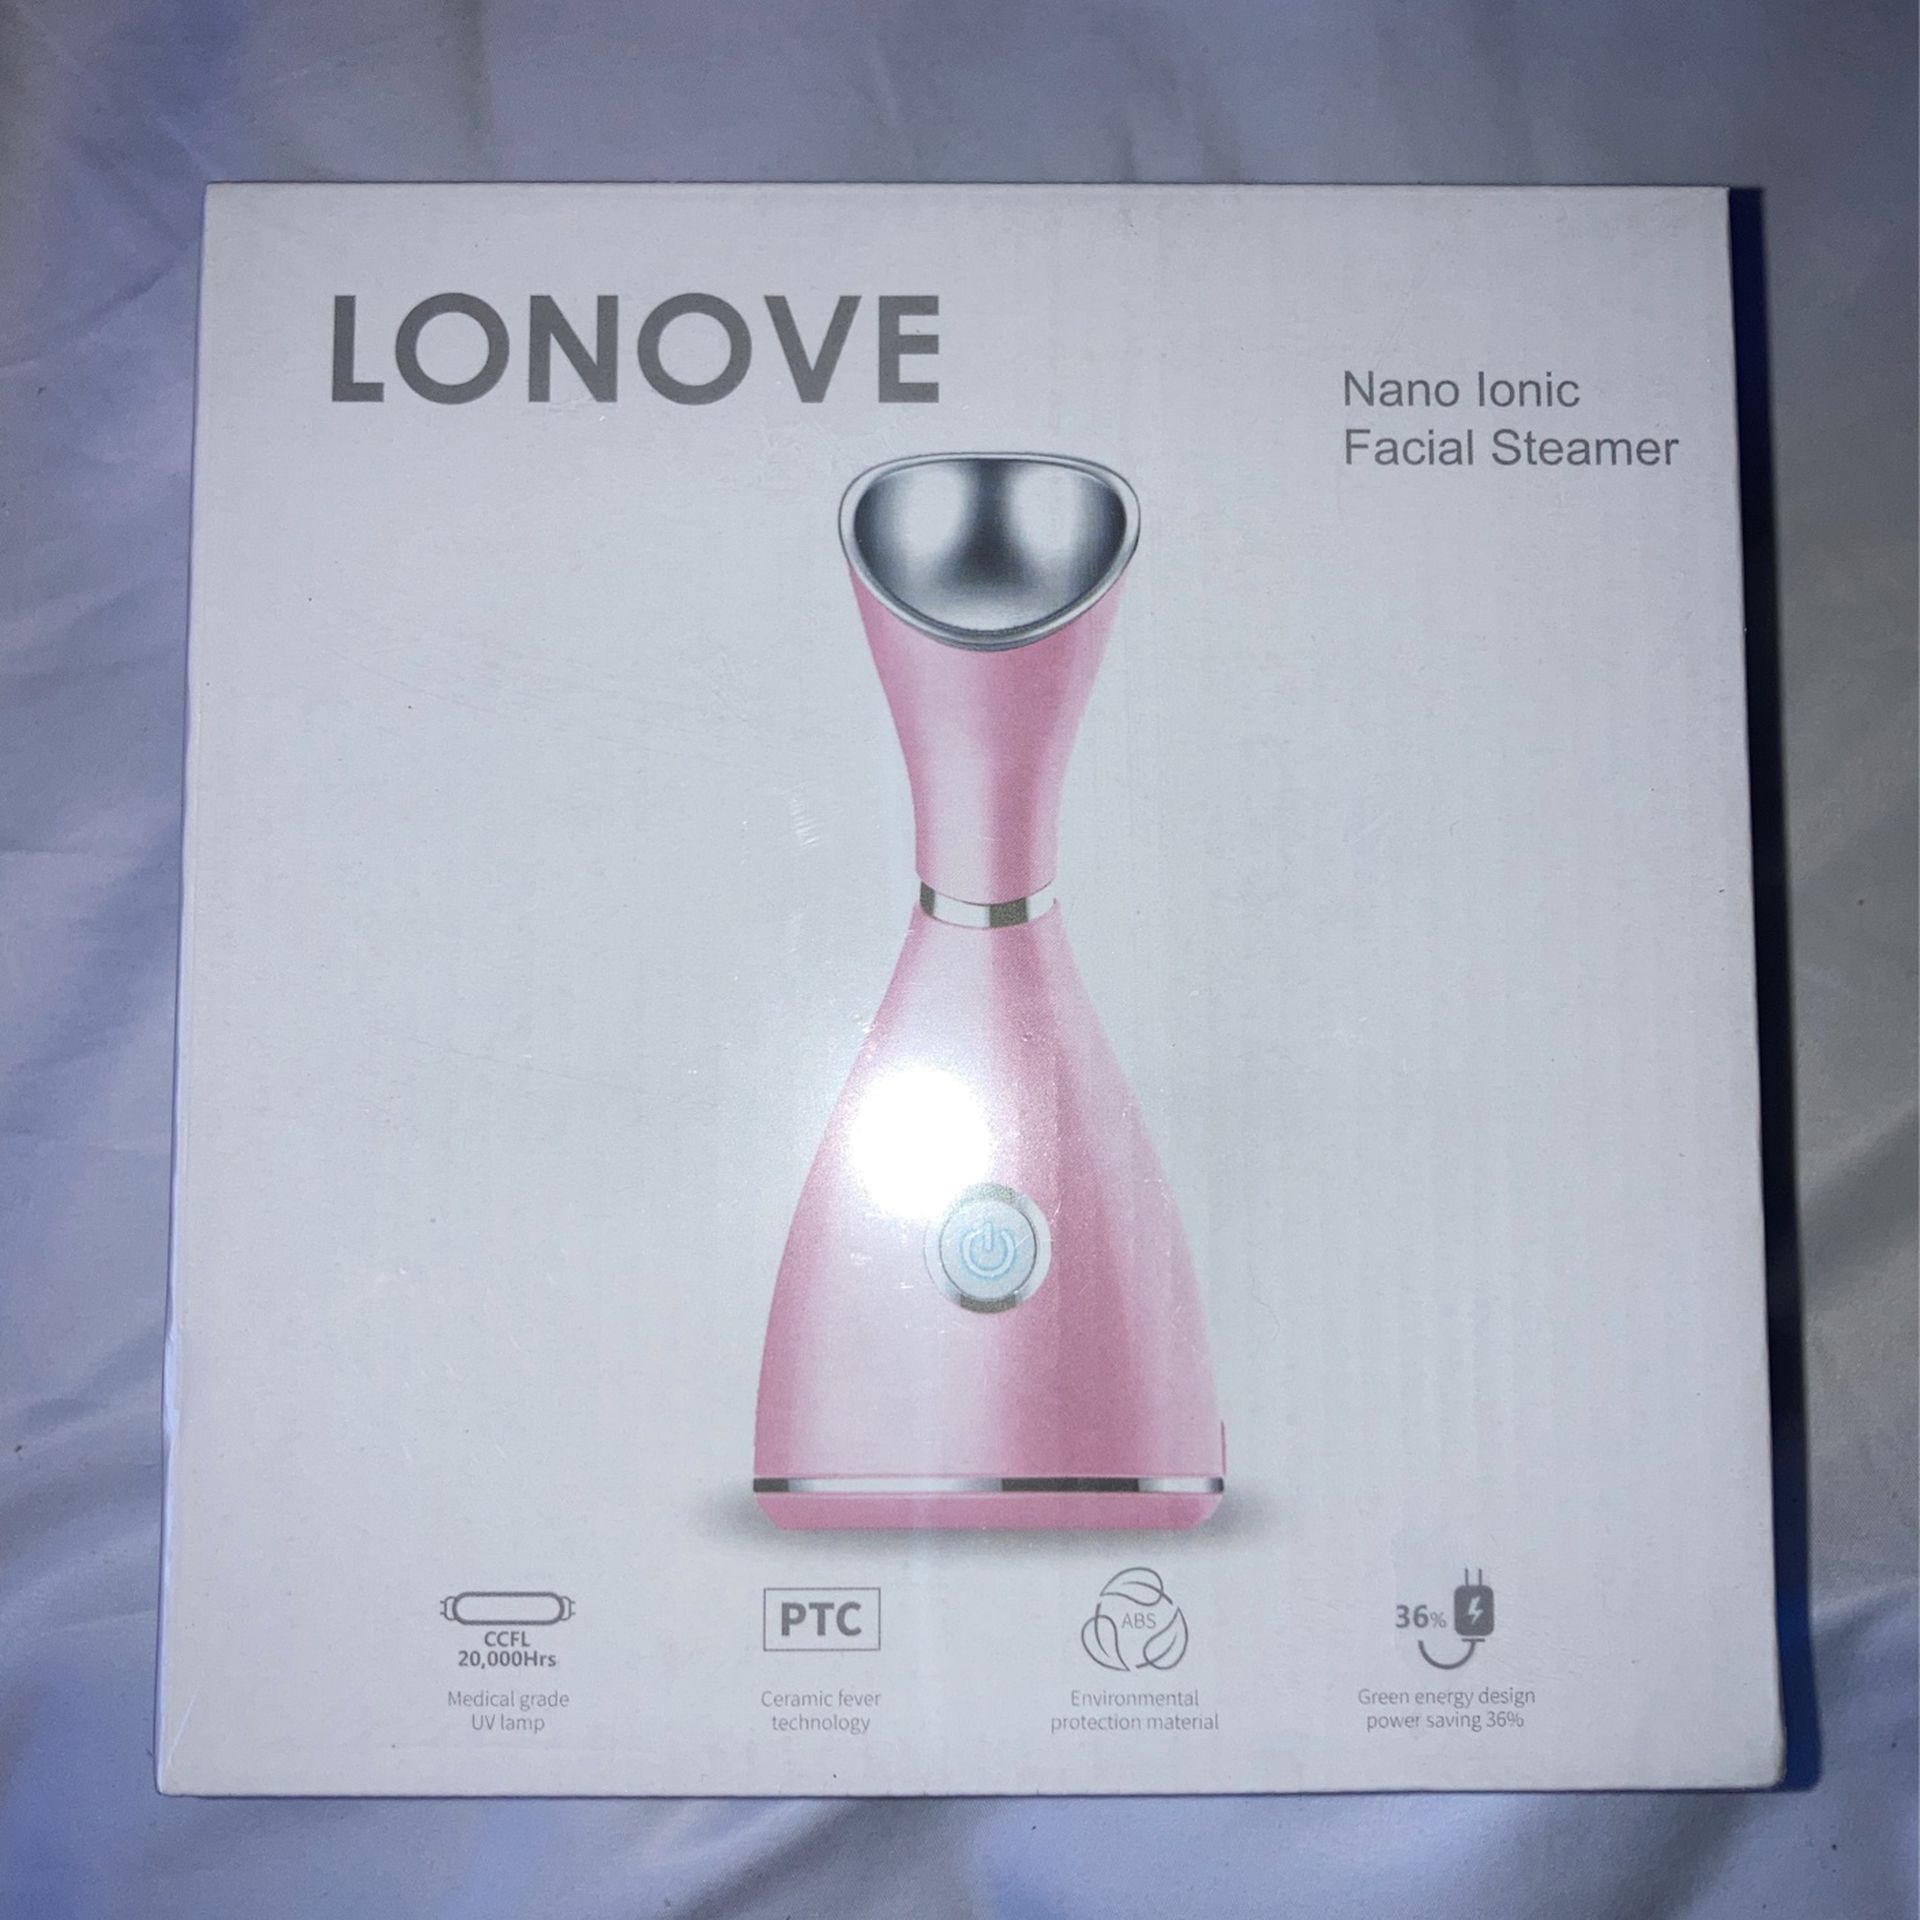 Lonove Nano Iconic Facial Steamer